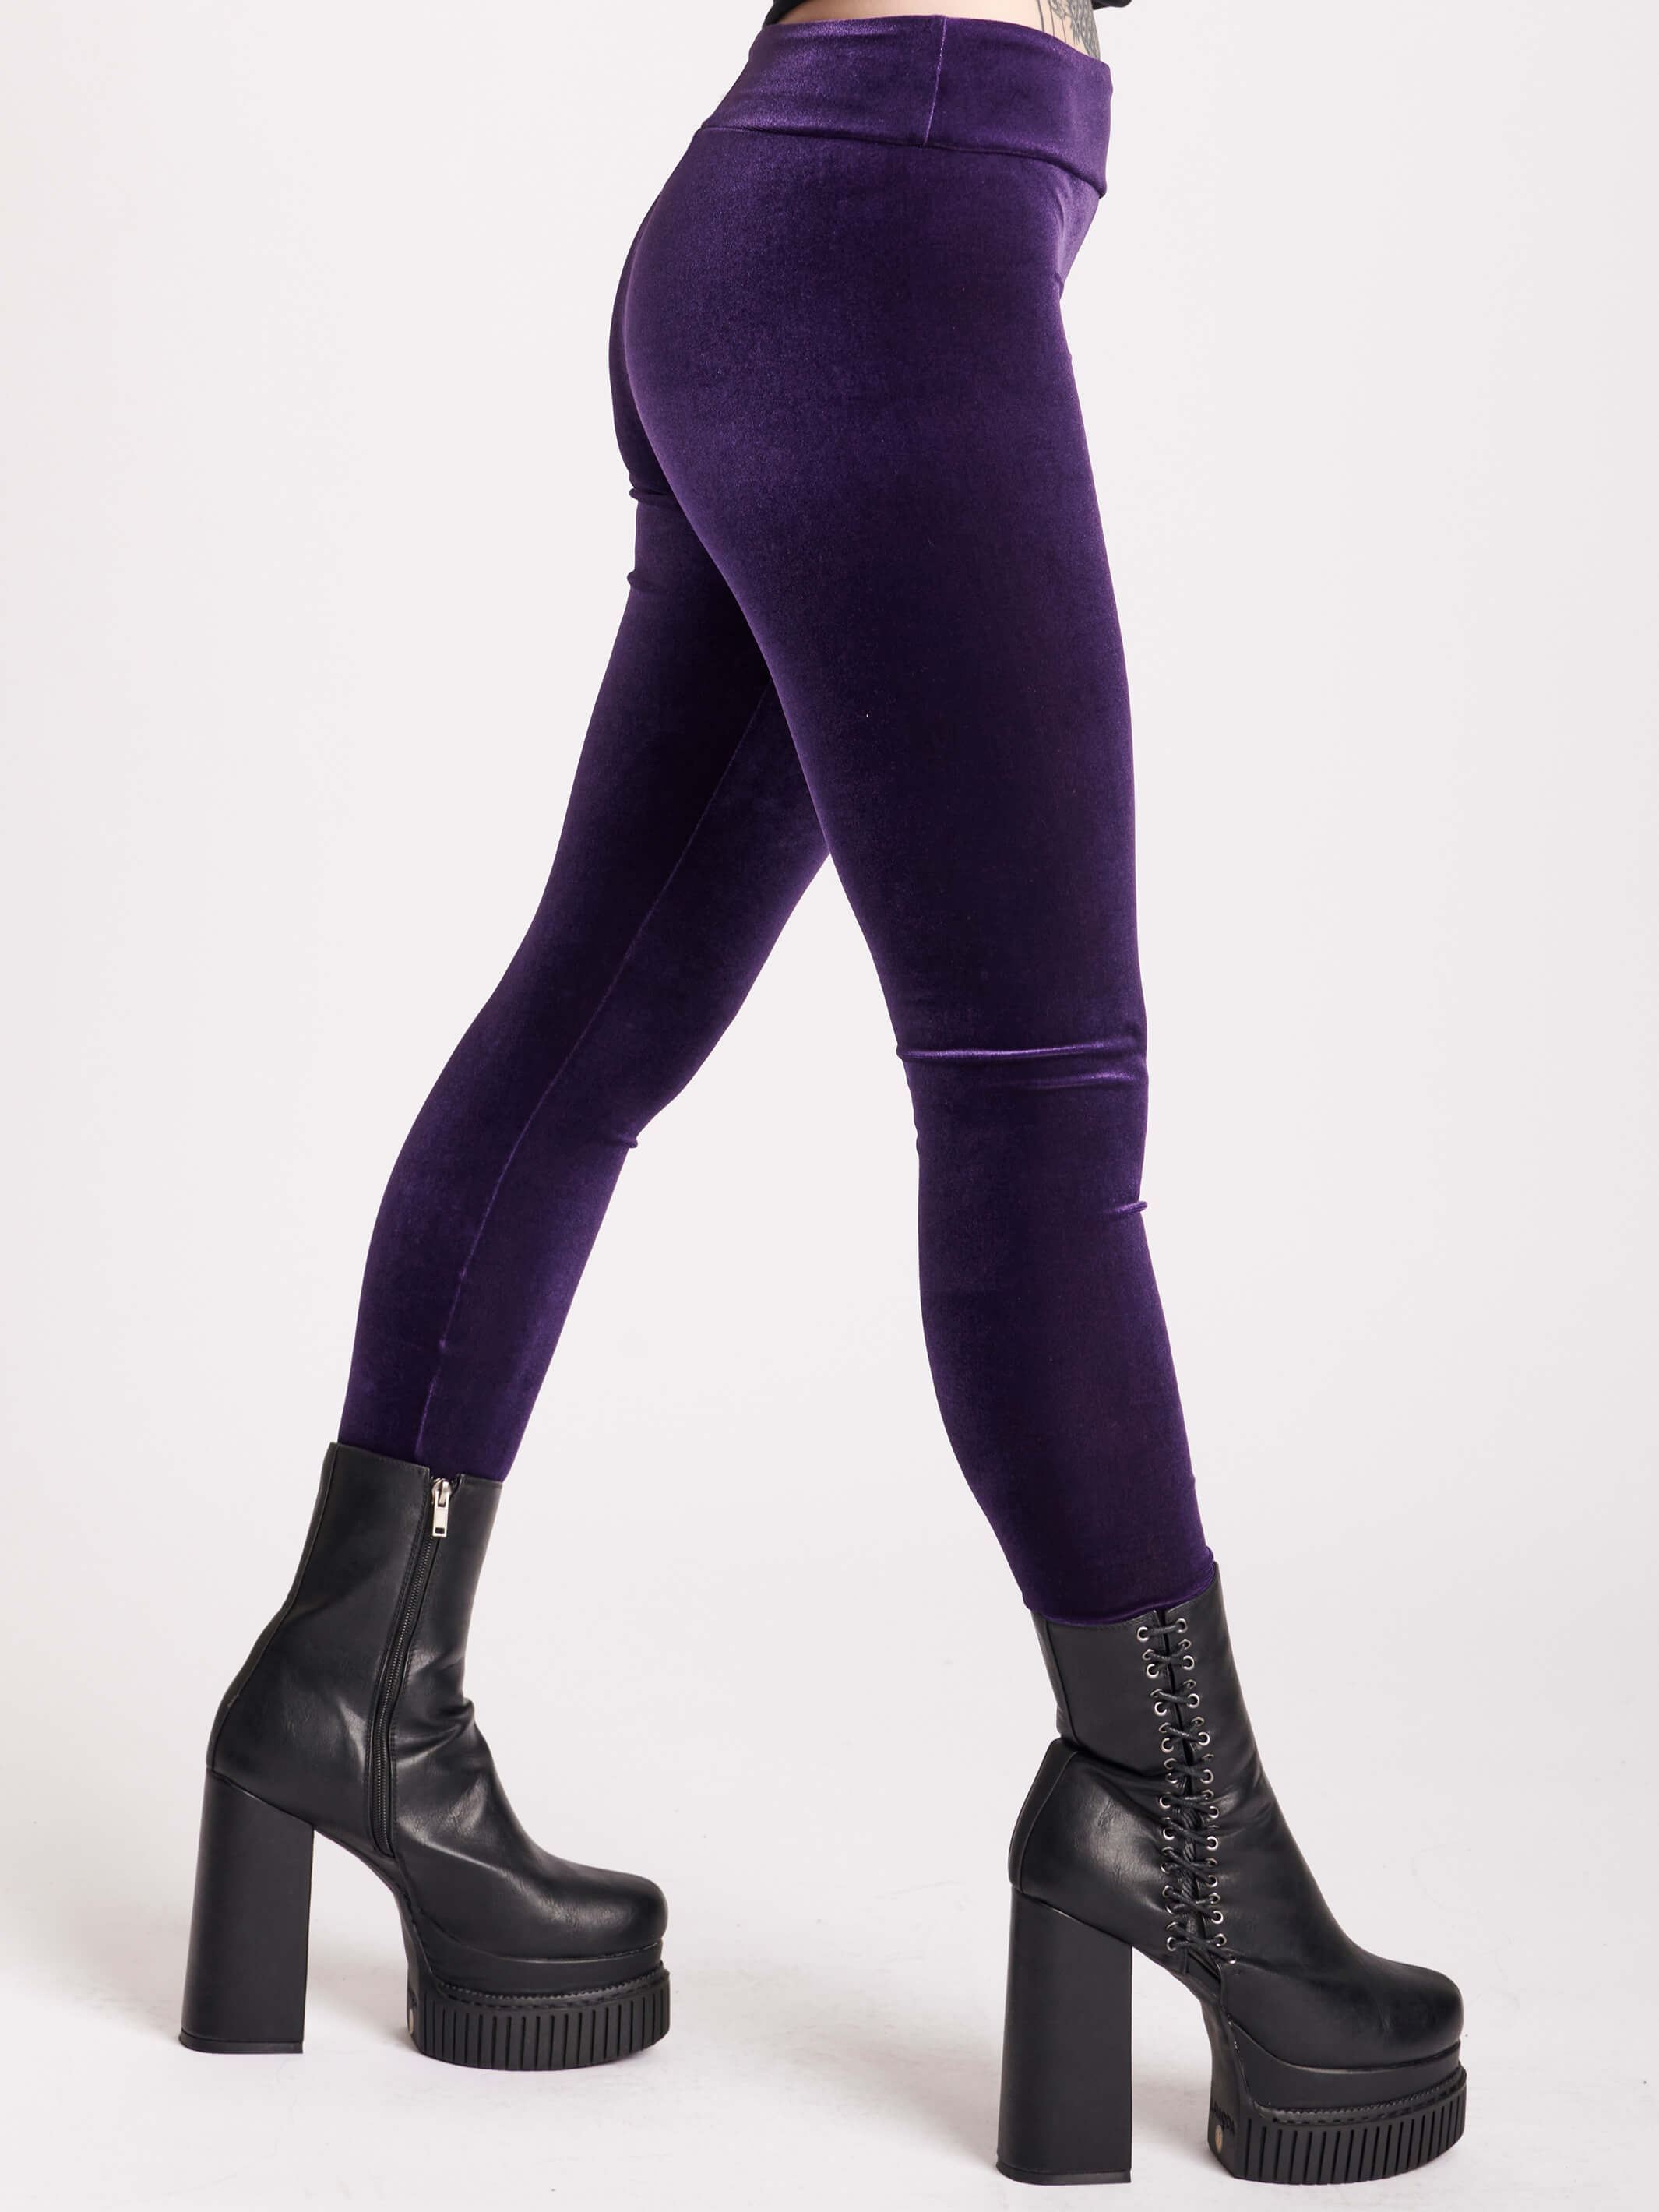 Torrid Platinum Velvet Leggings with Pearls Purple 2 2X 18 20 #G49244